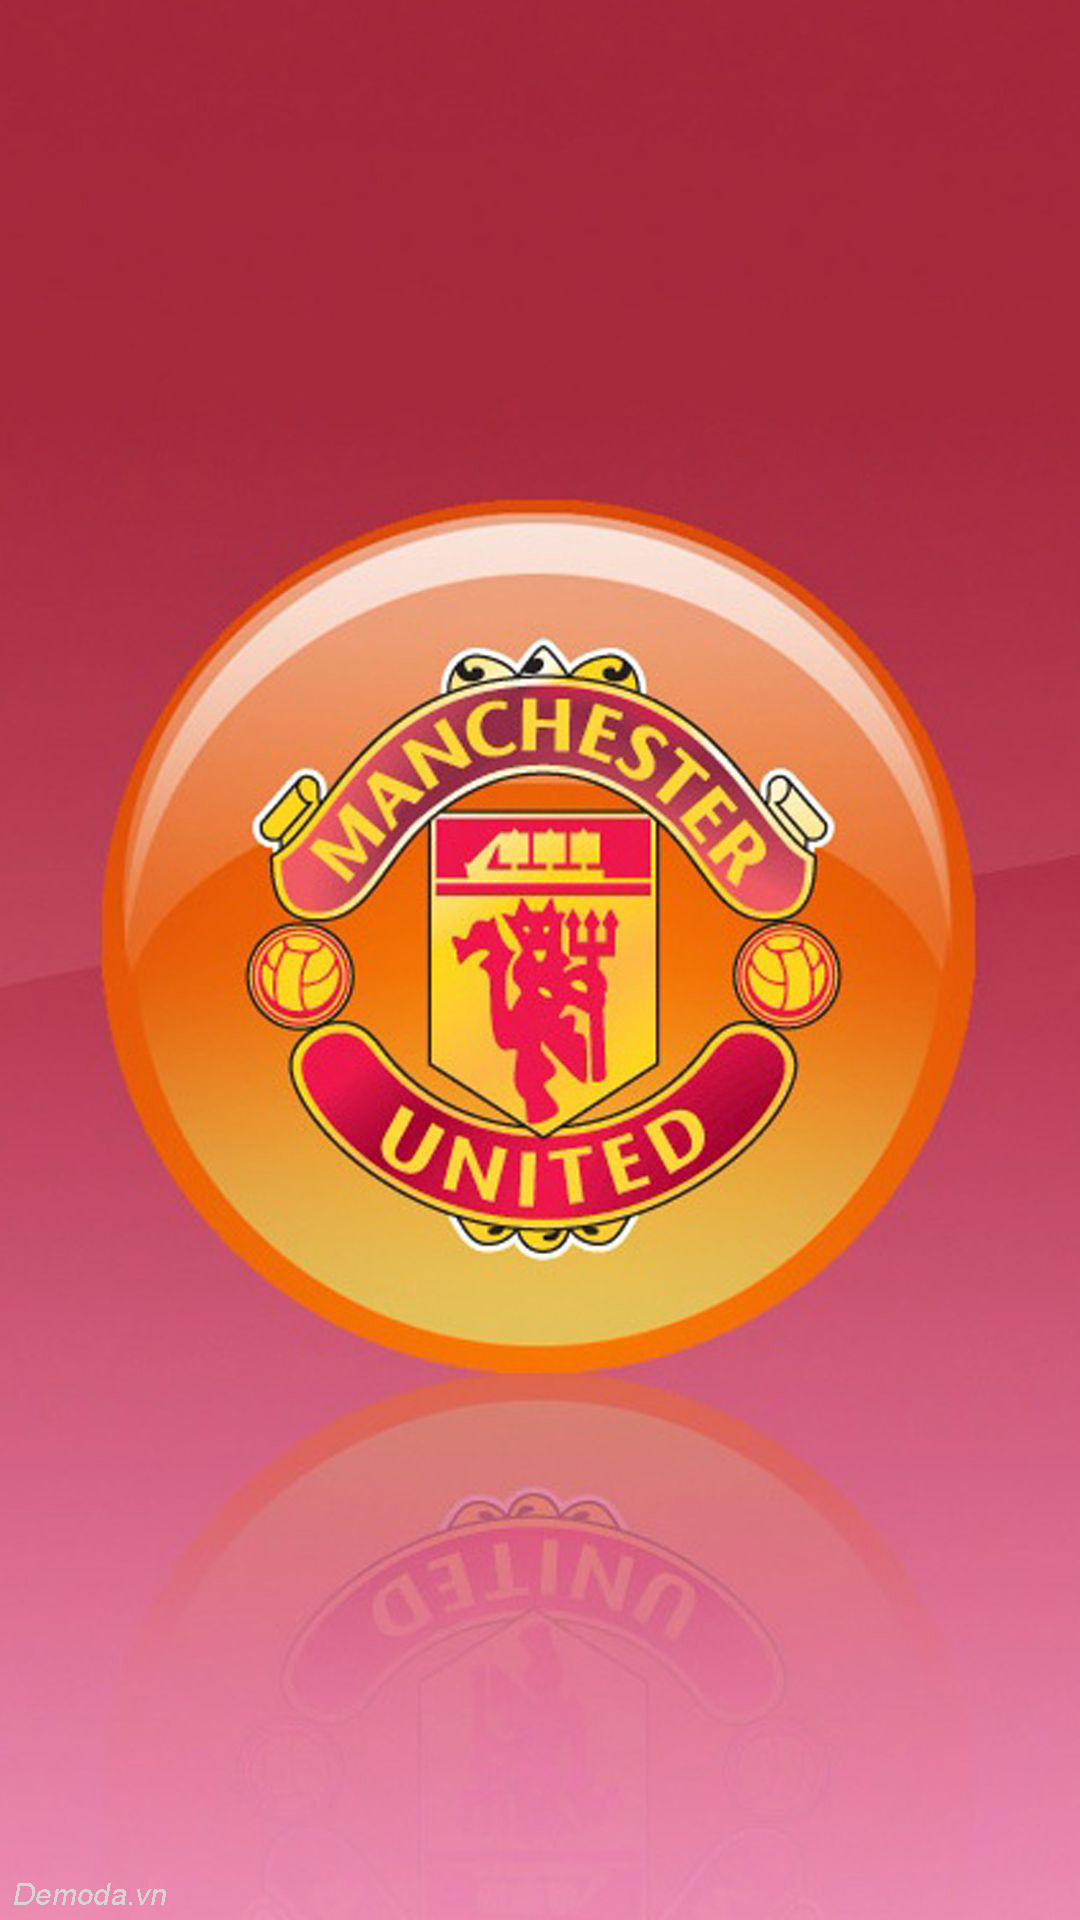 Manchester United  Sepak bola Olahraga Desain logo